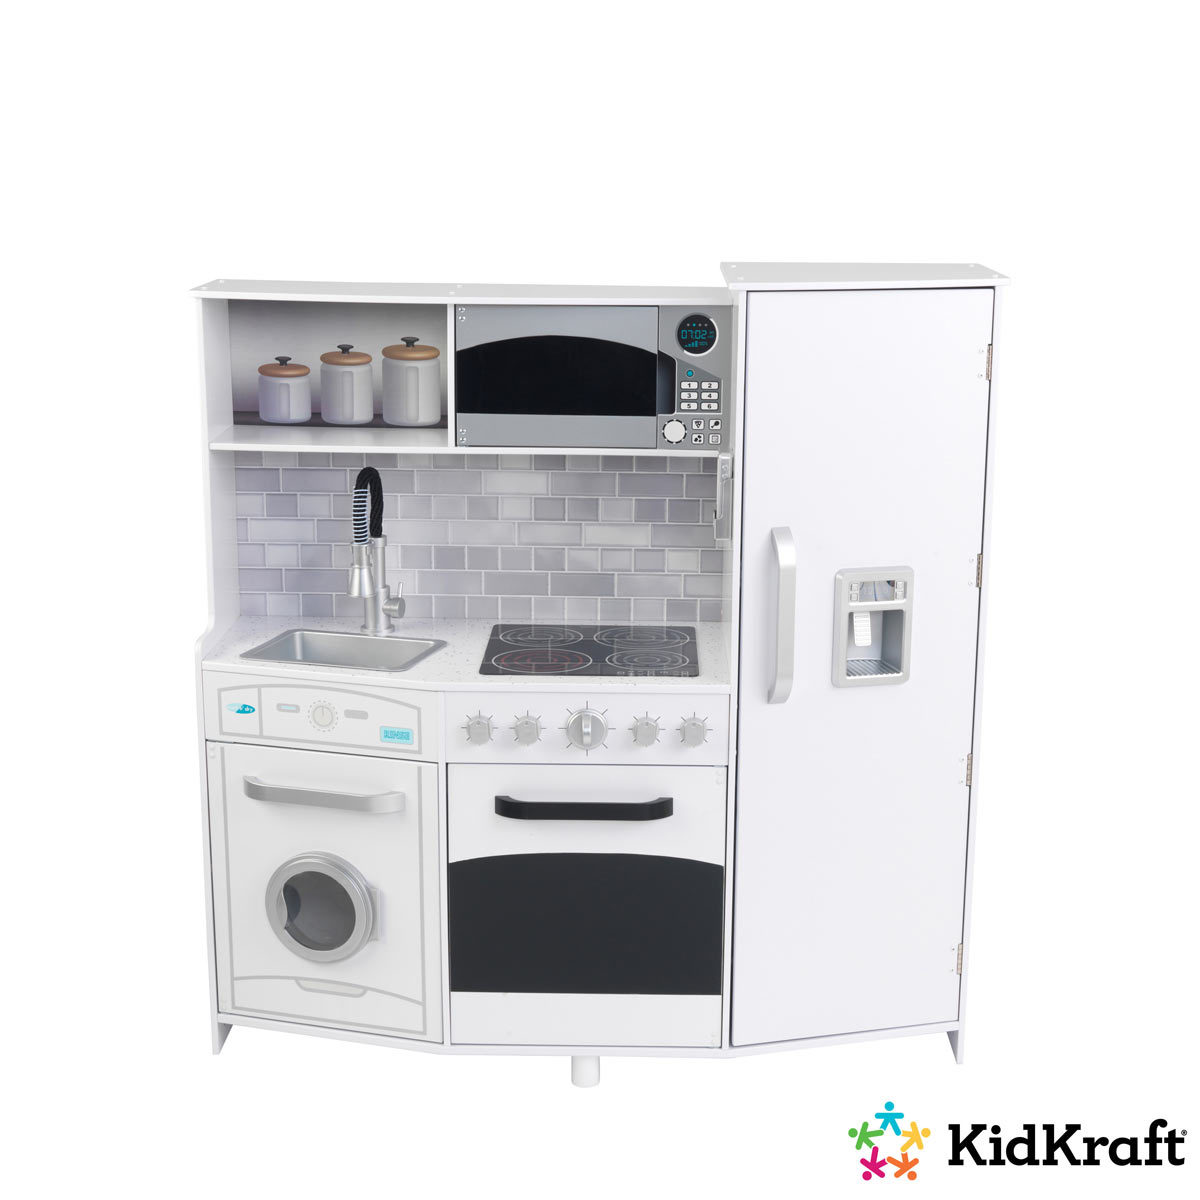 Kidkraft kitchen on white background